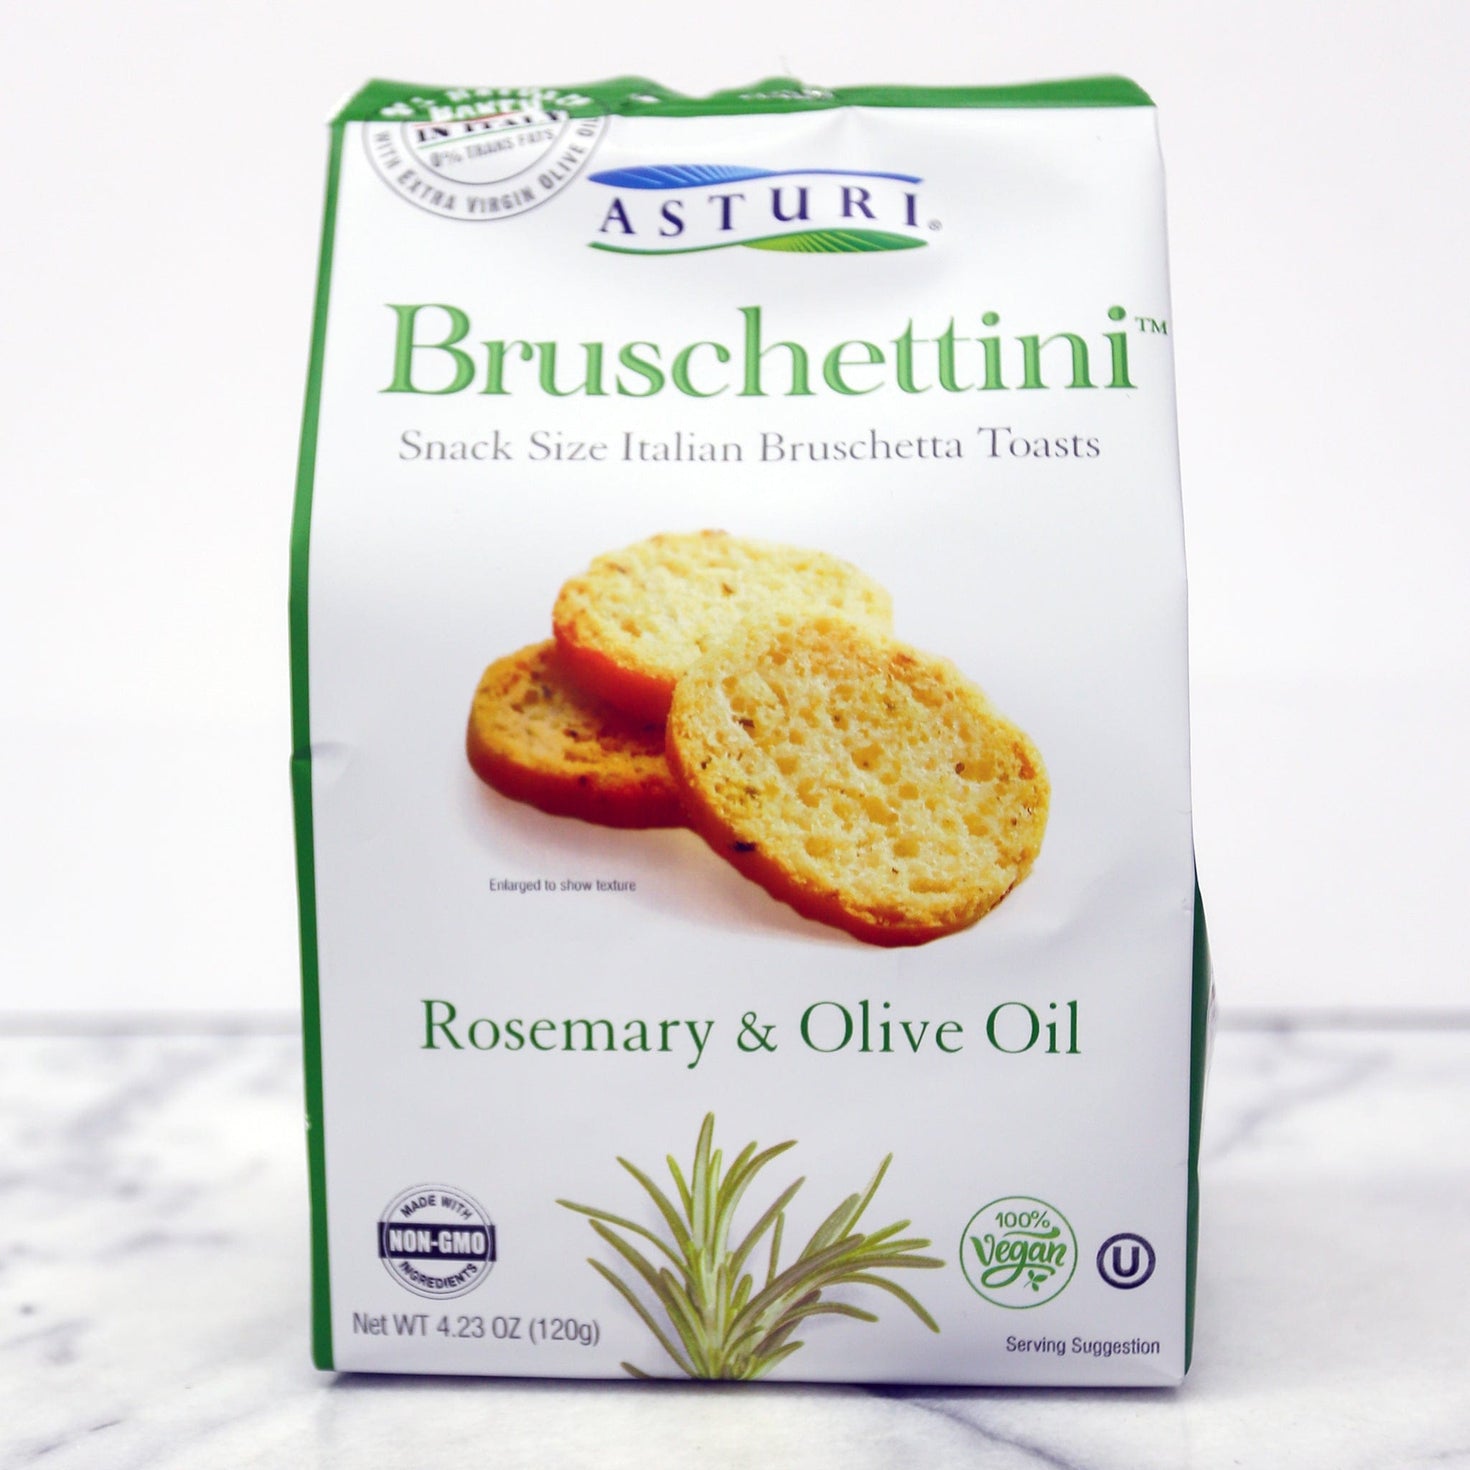 Asturi - Bruschettini - Rosemary & Olive Oil 4.23oz